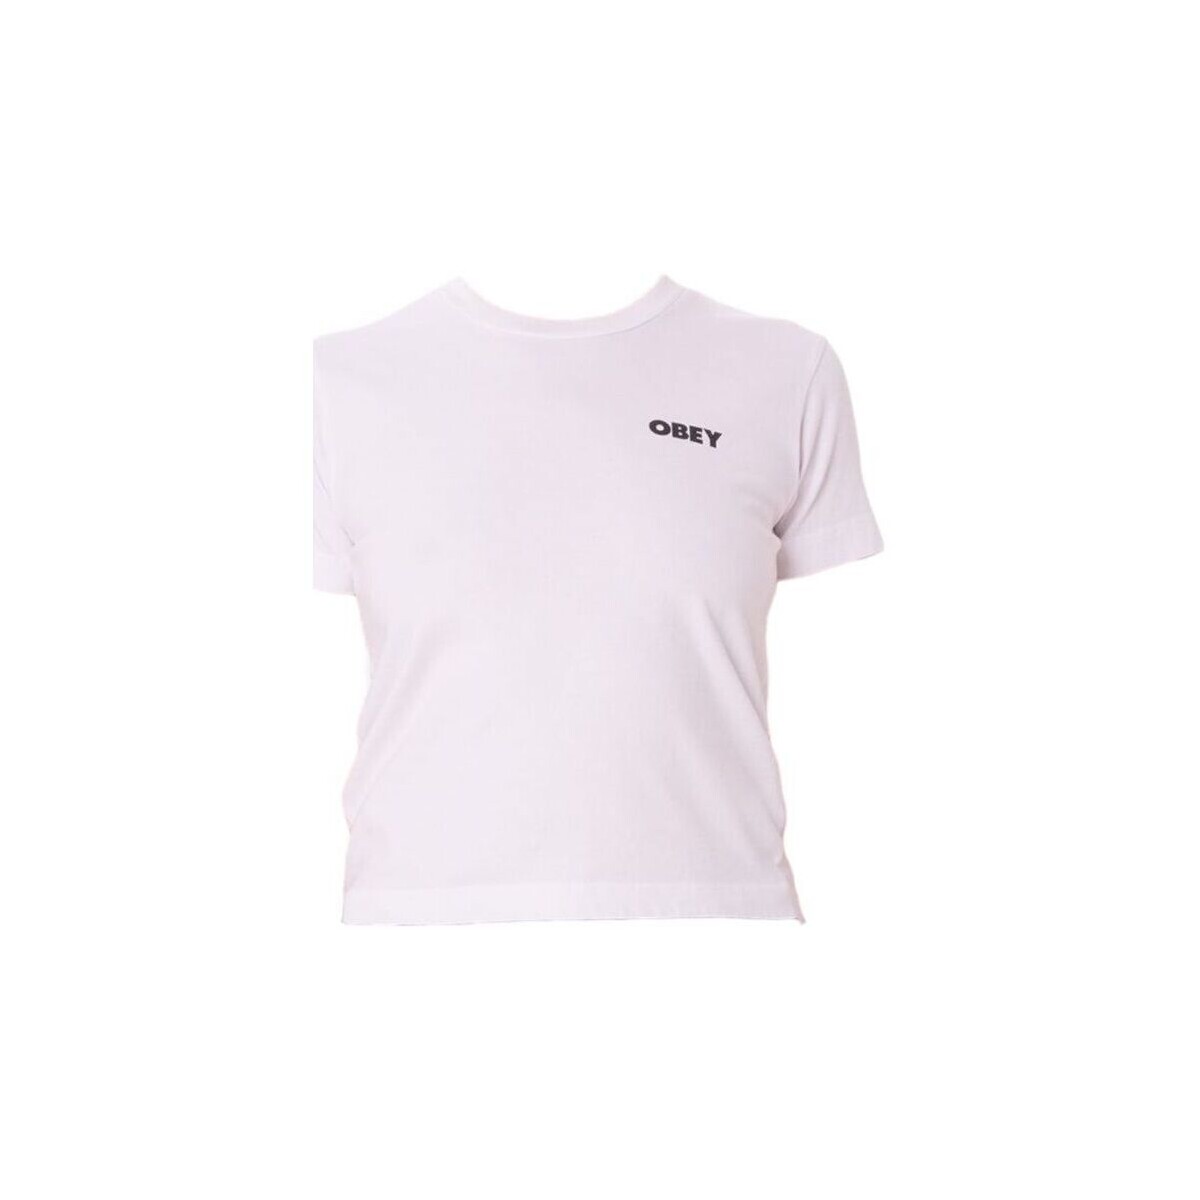 textil Mujer Camisetas manga corta Obey Camiseta Visual Studios Mujer White Blanco